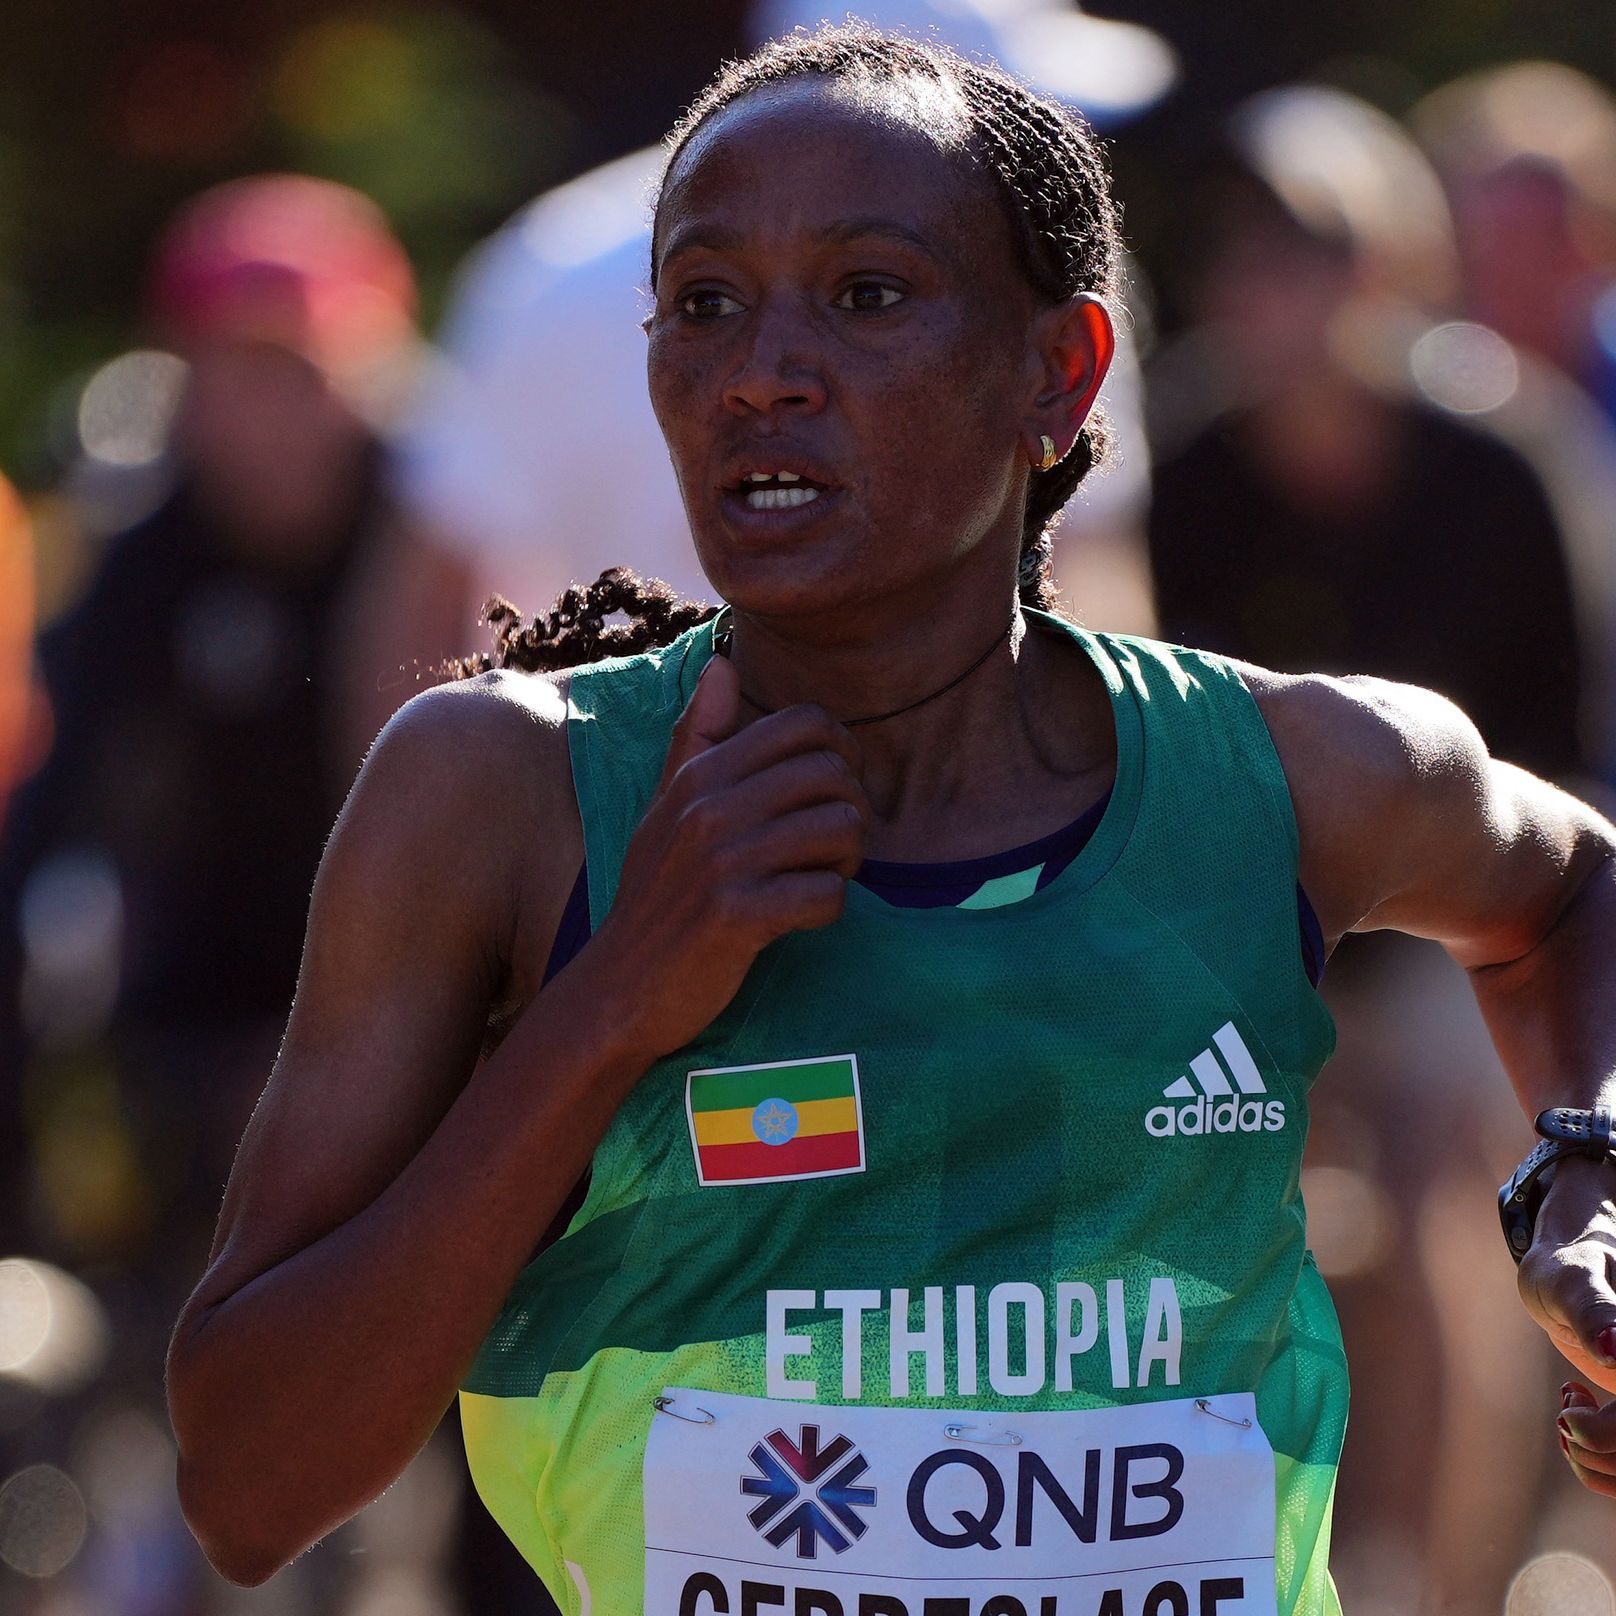 Even during TPLF revolt, Ethiopia keeps Tigrayan runners privilege